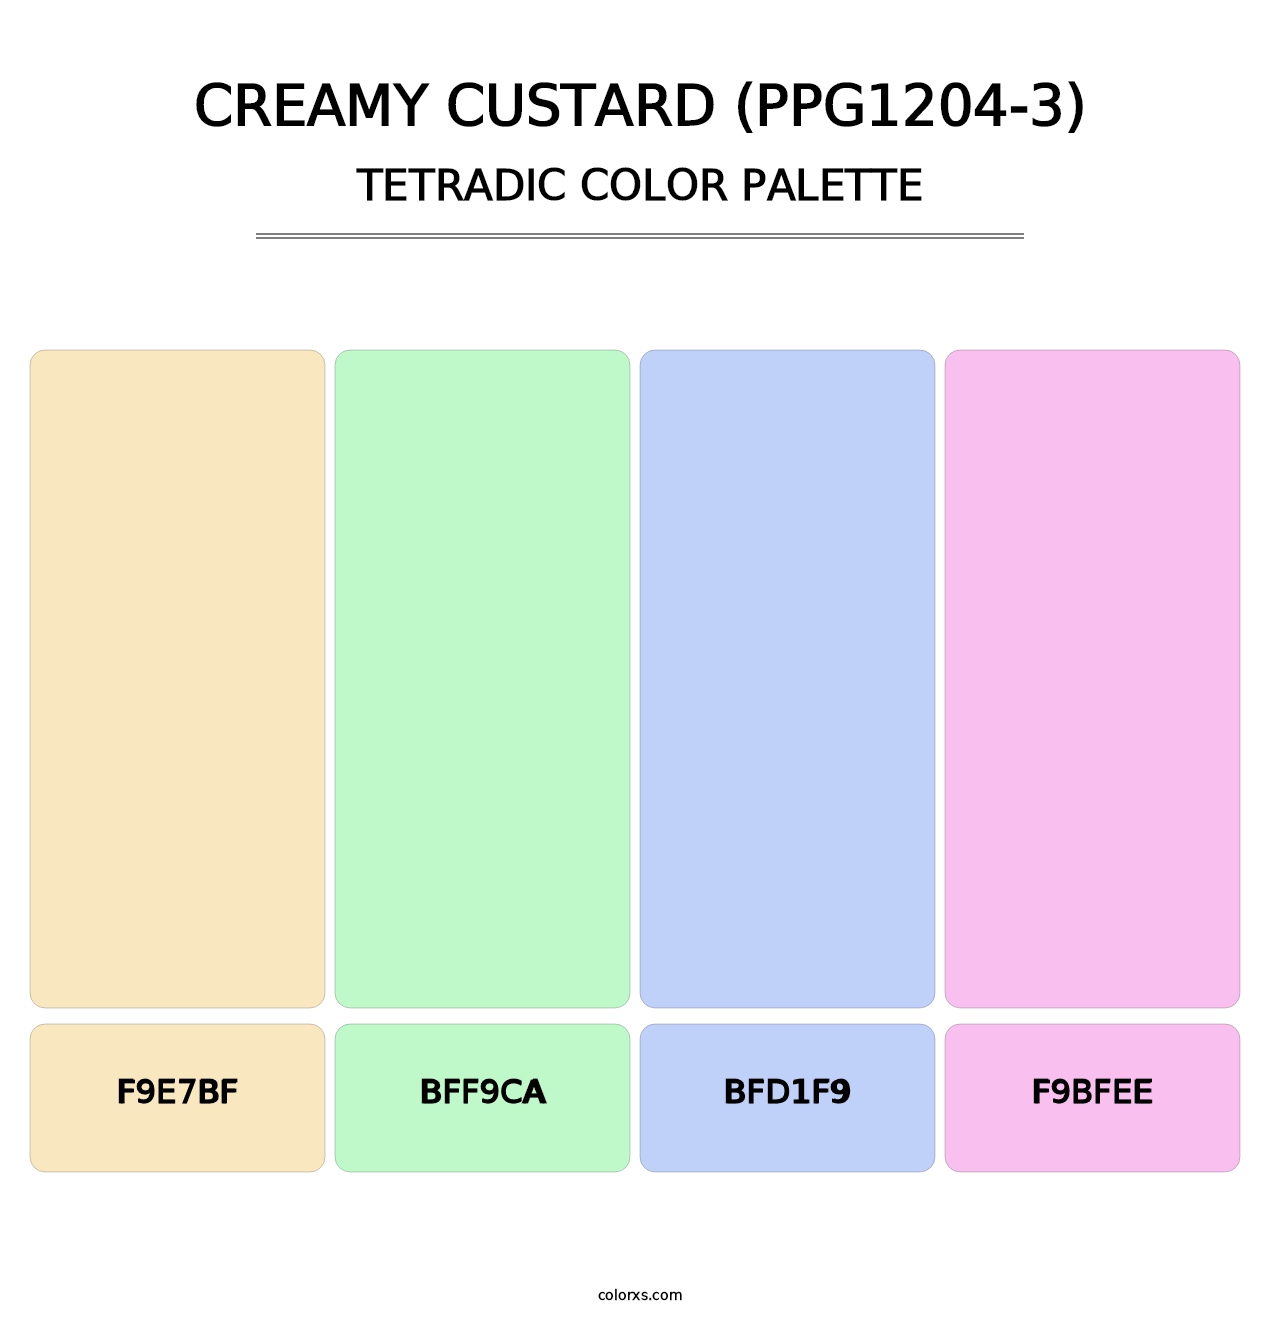 Creamy Custard (PPG1204-3) - Tetradic Color Palette